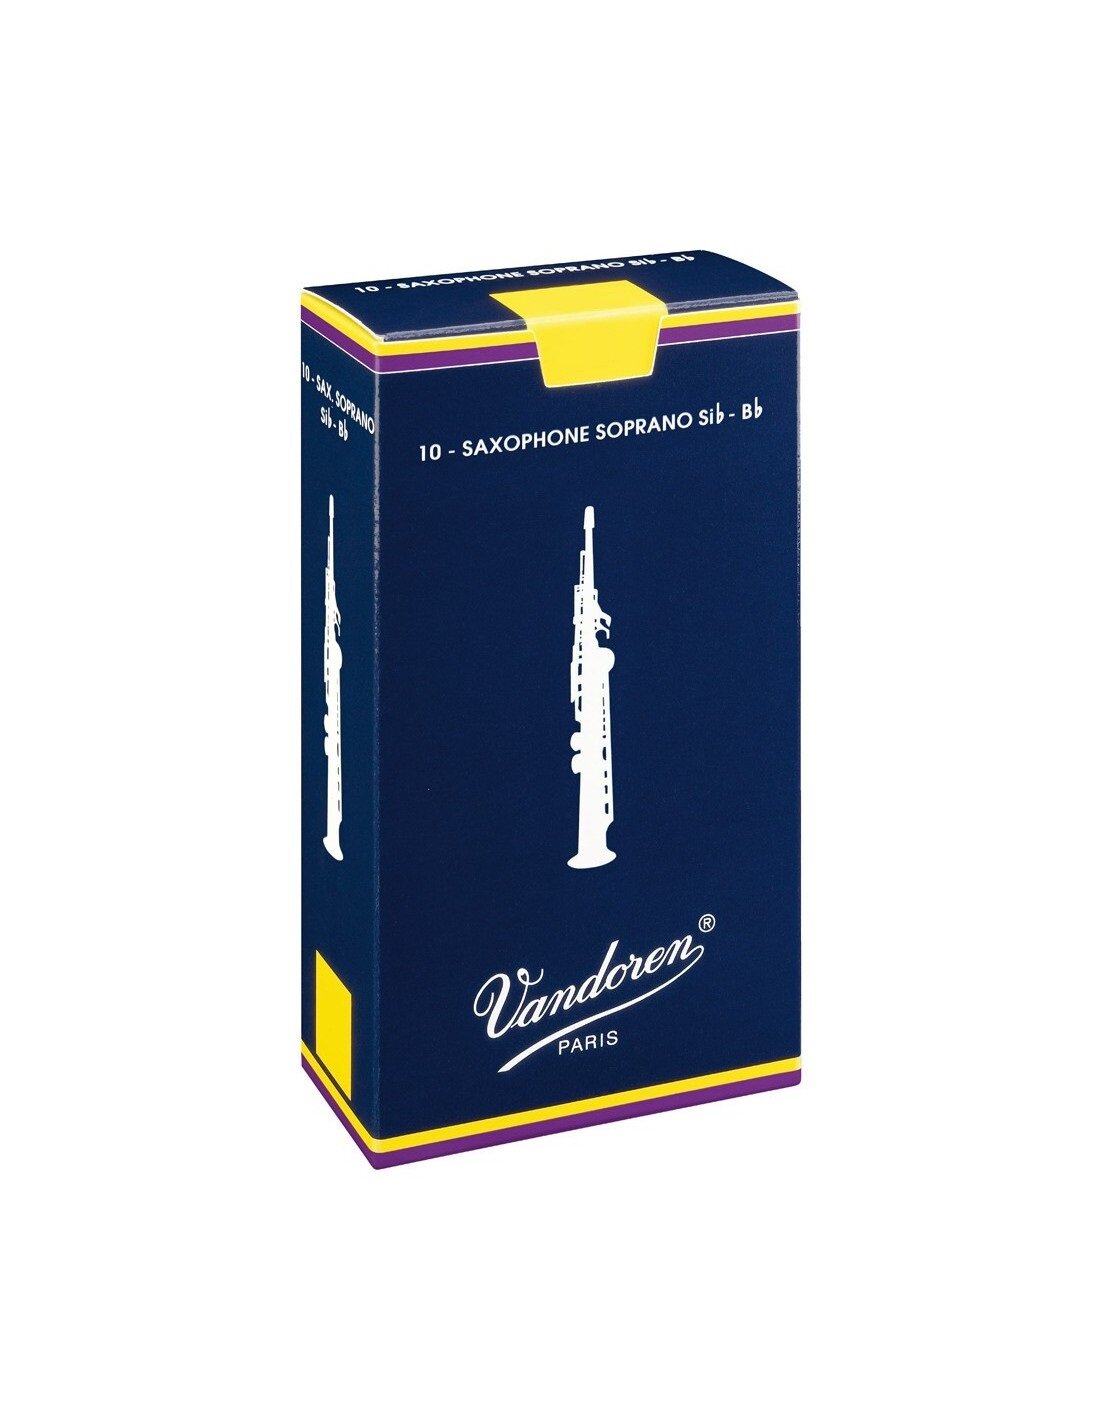 Vandoren Classic Saxophone Soprano Sib Force 1.5 x10 : photo 1